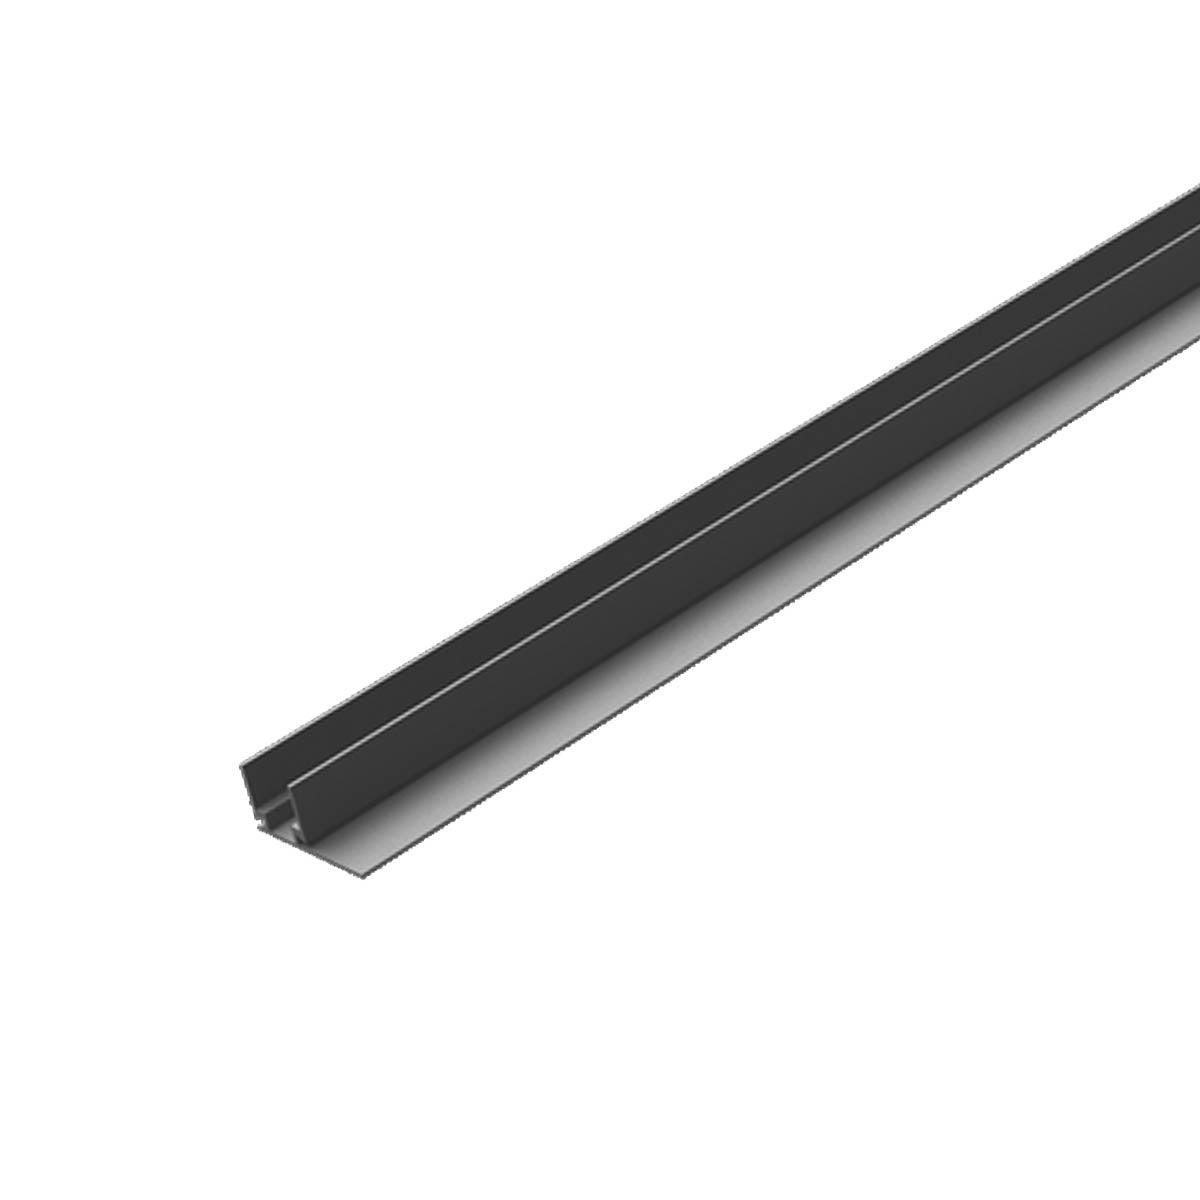 NeonFlex PRO-L 1m, Black Aluminum “F” Channel + 20mm Flange - Bees Lighting